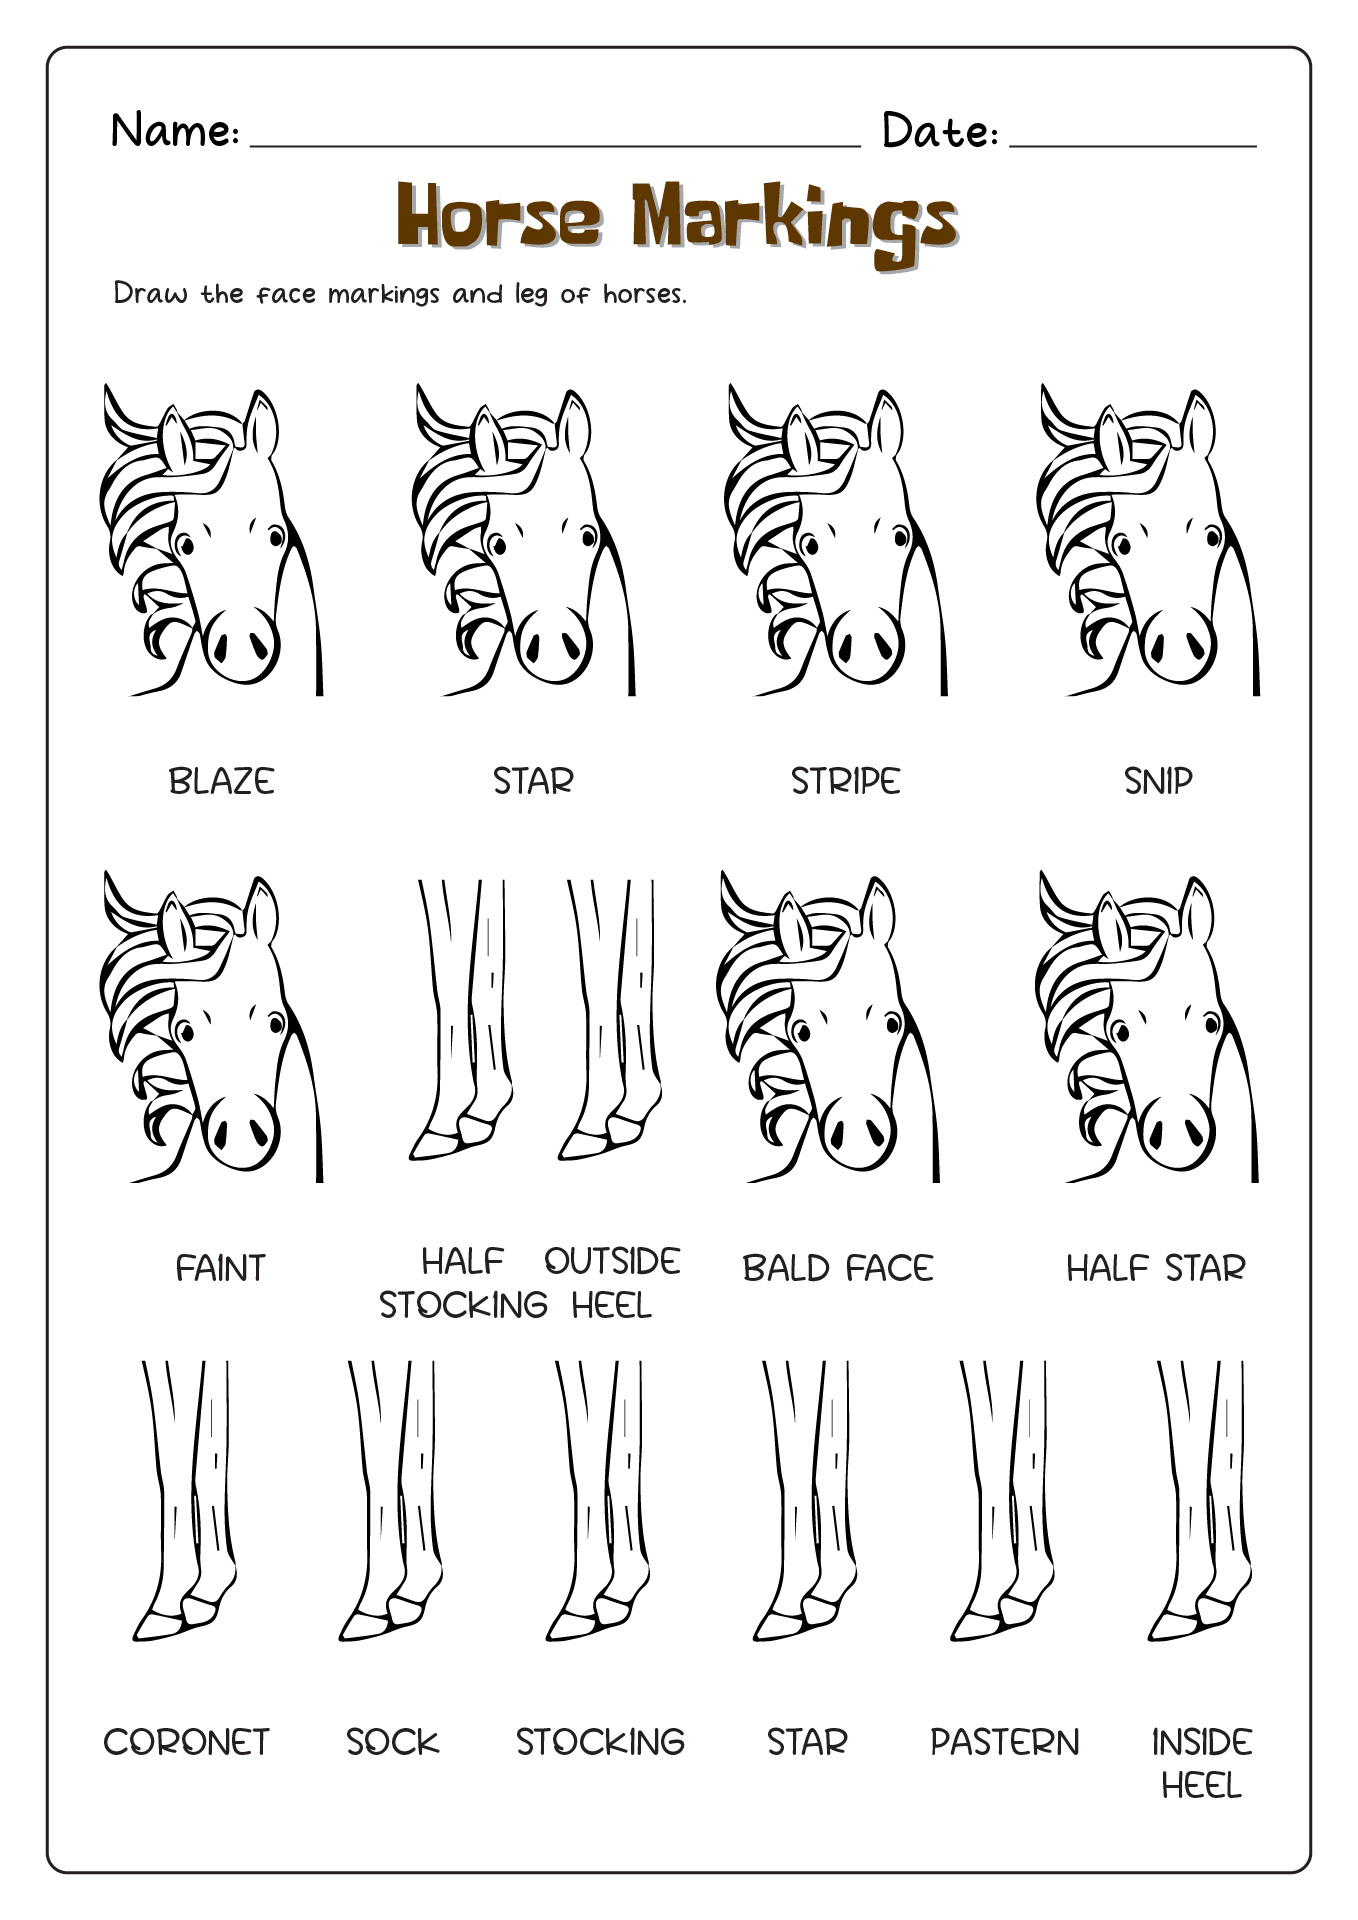 Horse Face Markings and Leg Worksheet